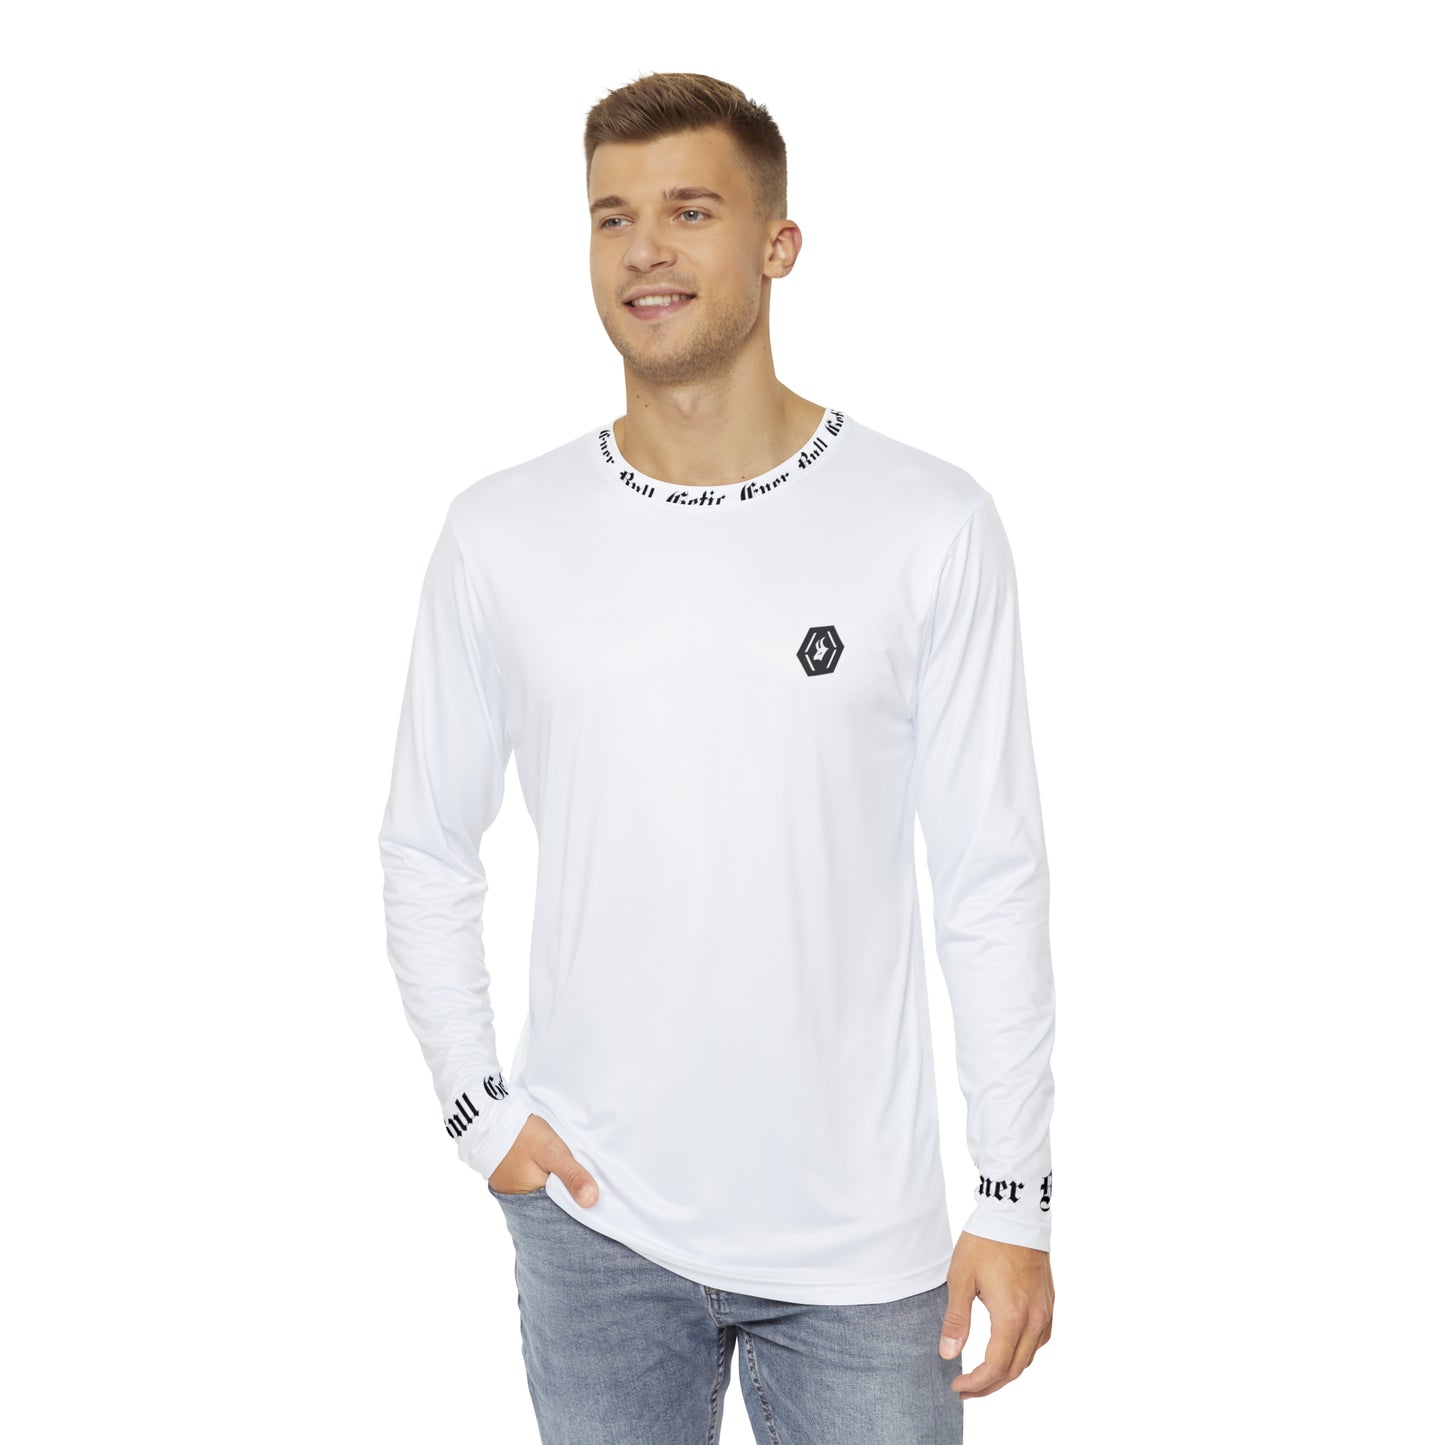 EnerBullGetic Crewneck Sleeve Shirt White Edition